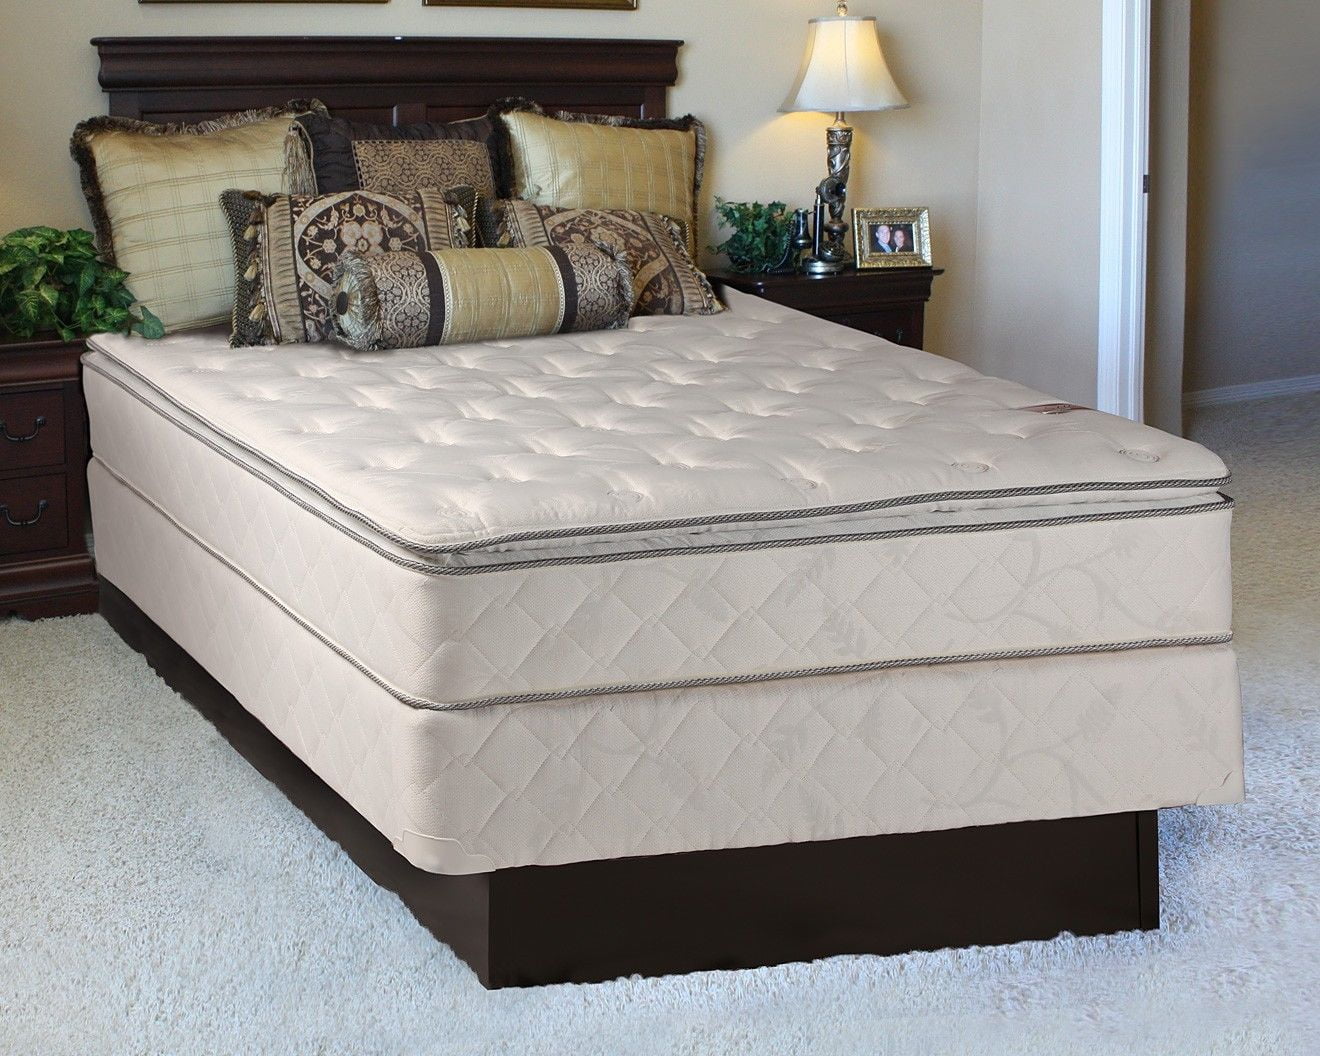 woodhaven king pillow top plush mattress set